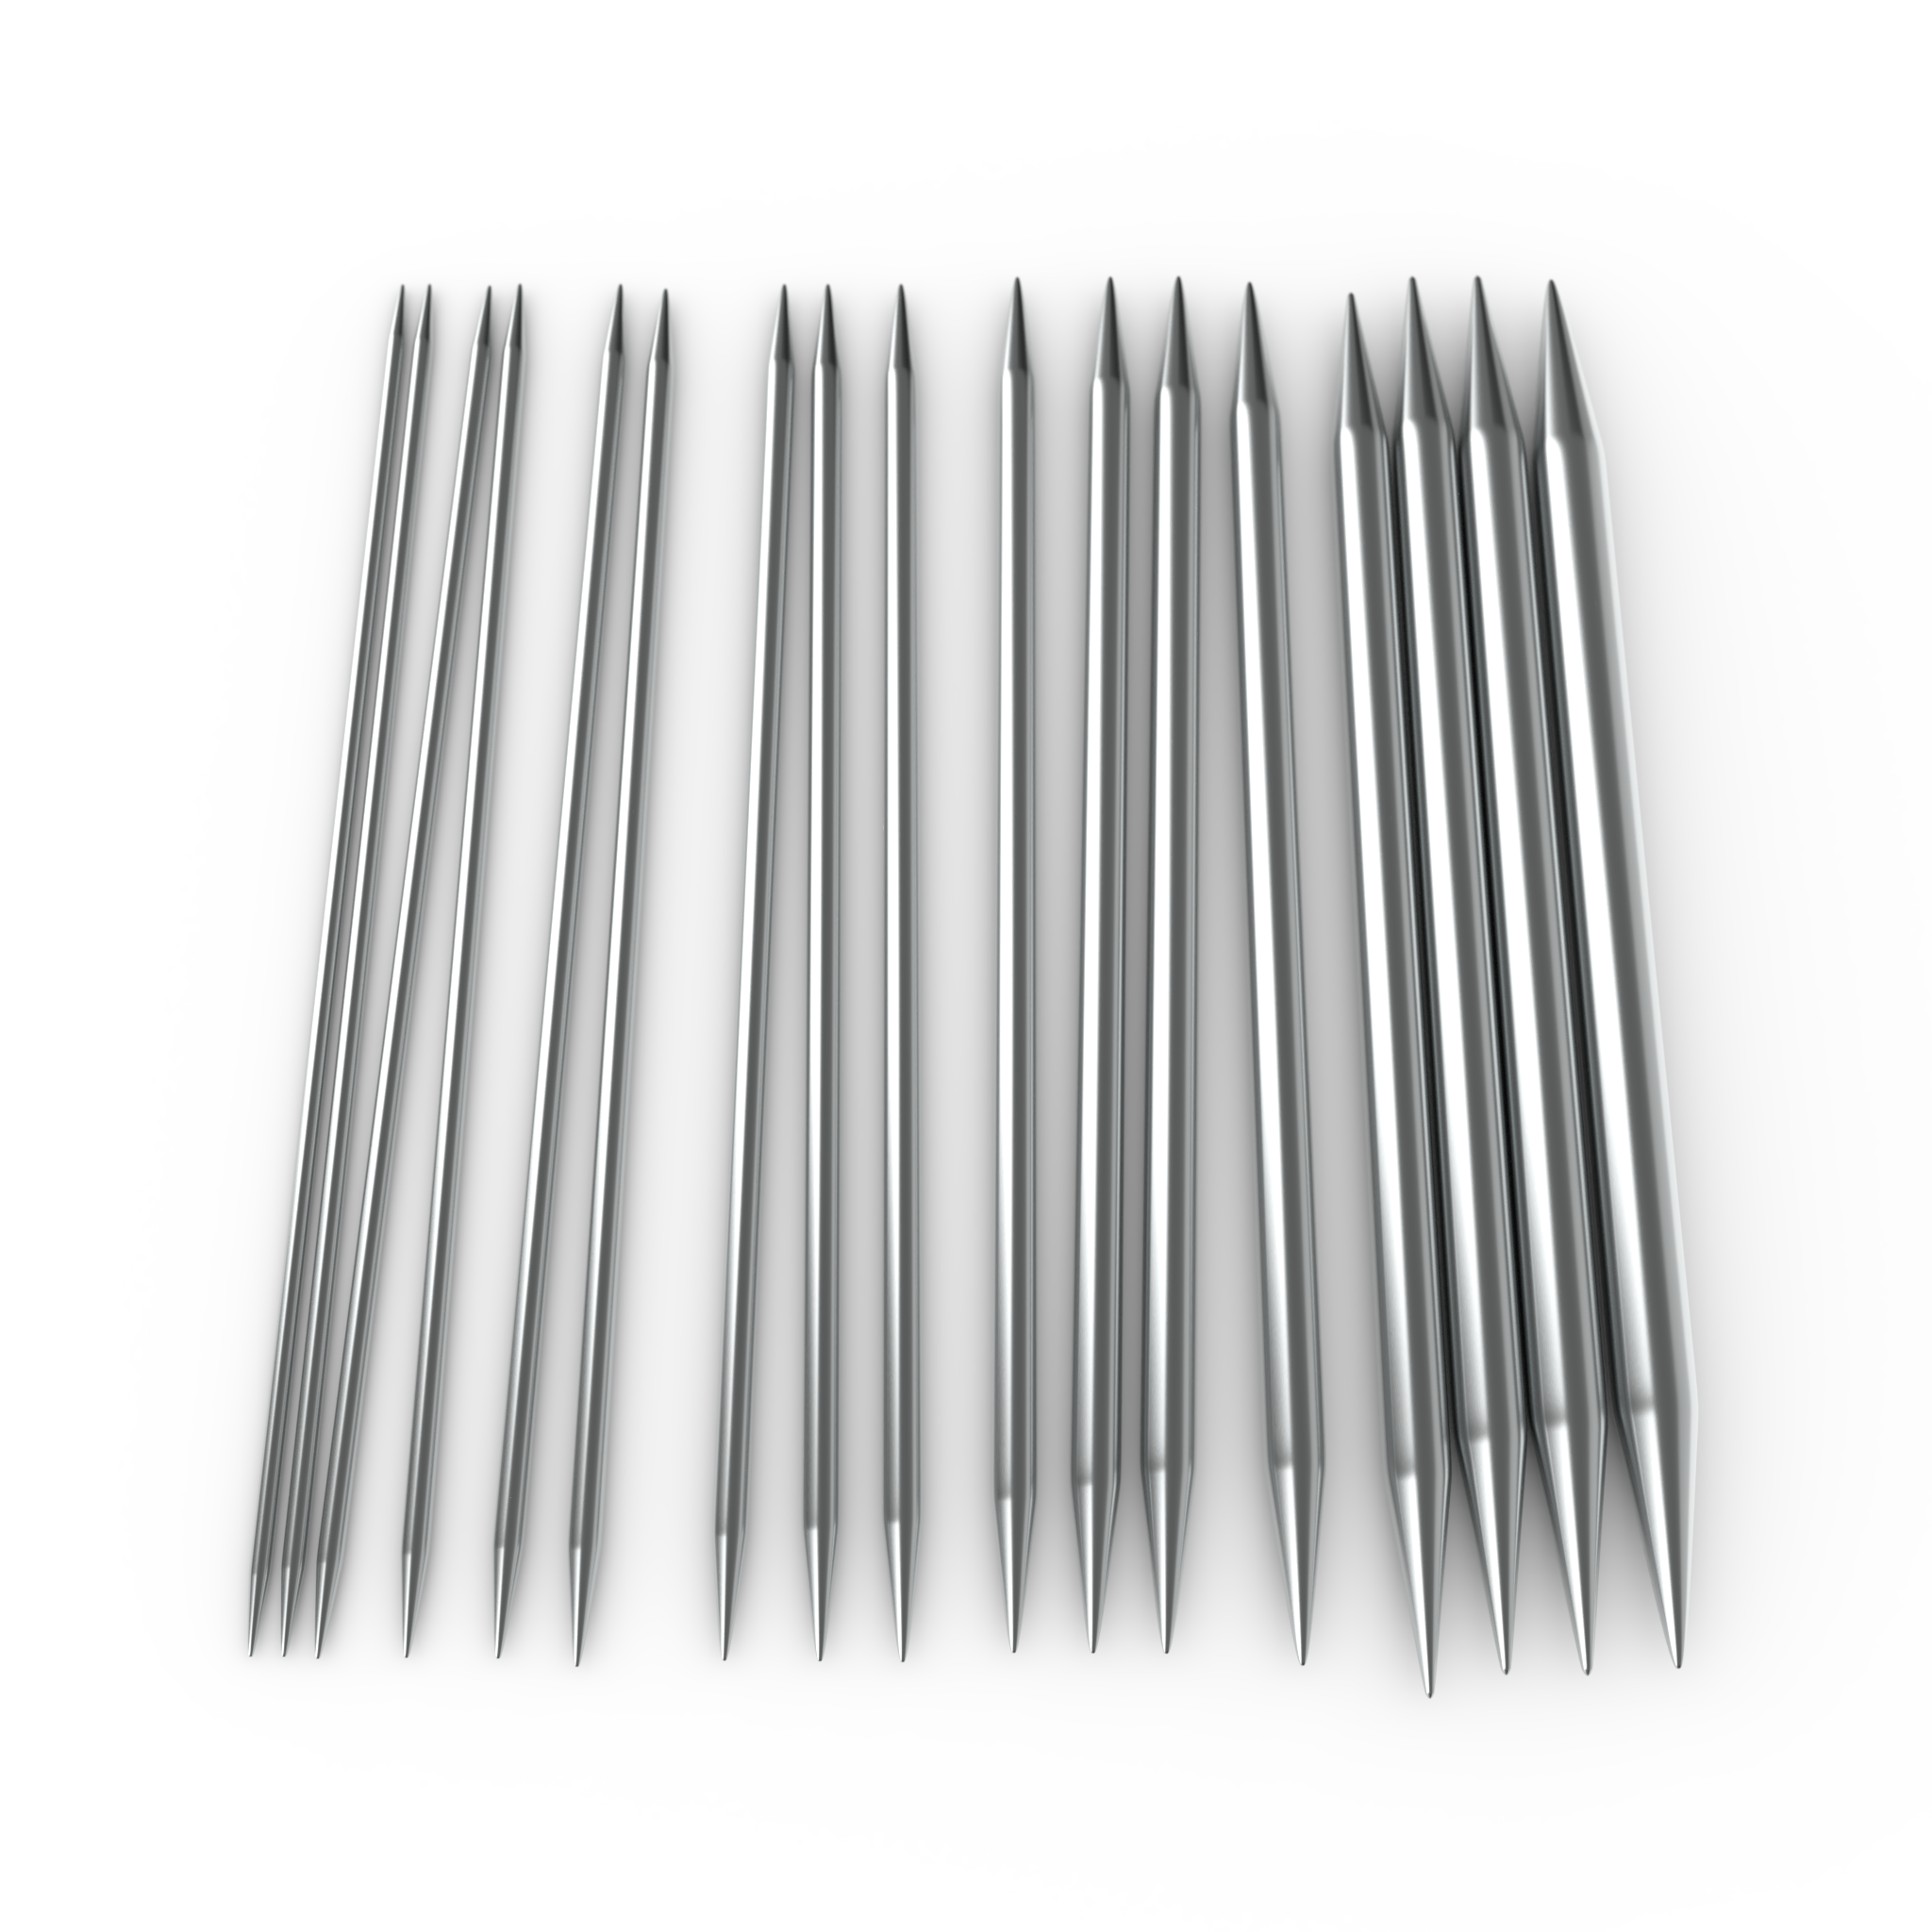 Double Point Aluminum Knitting Needles 7-Size 0/2mm 